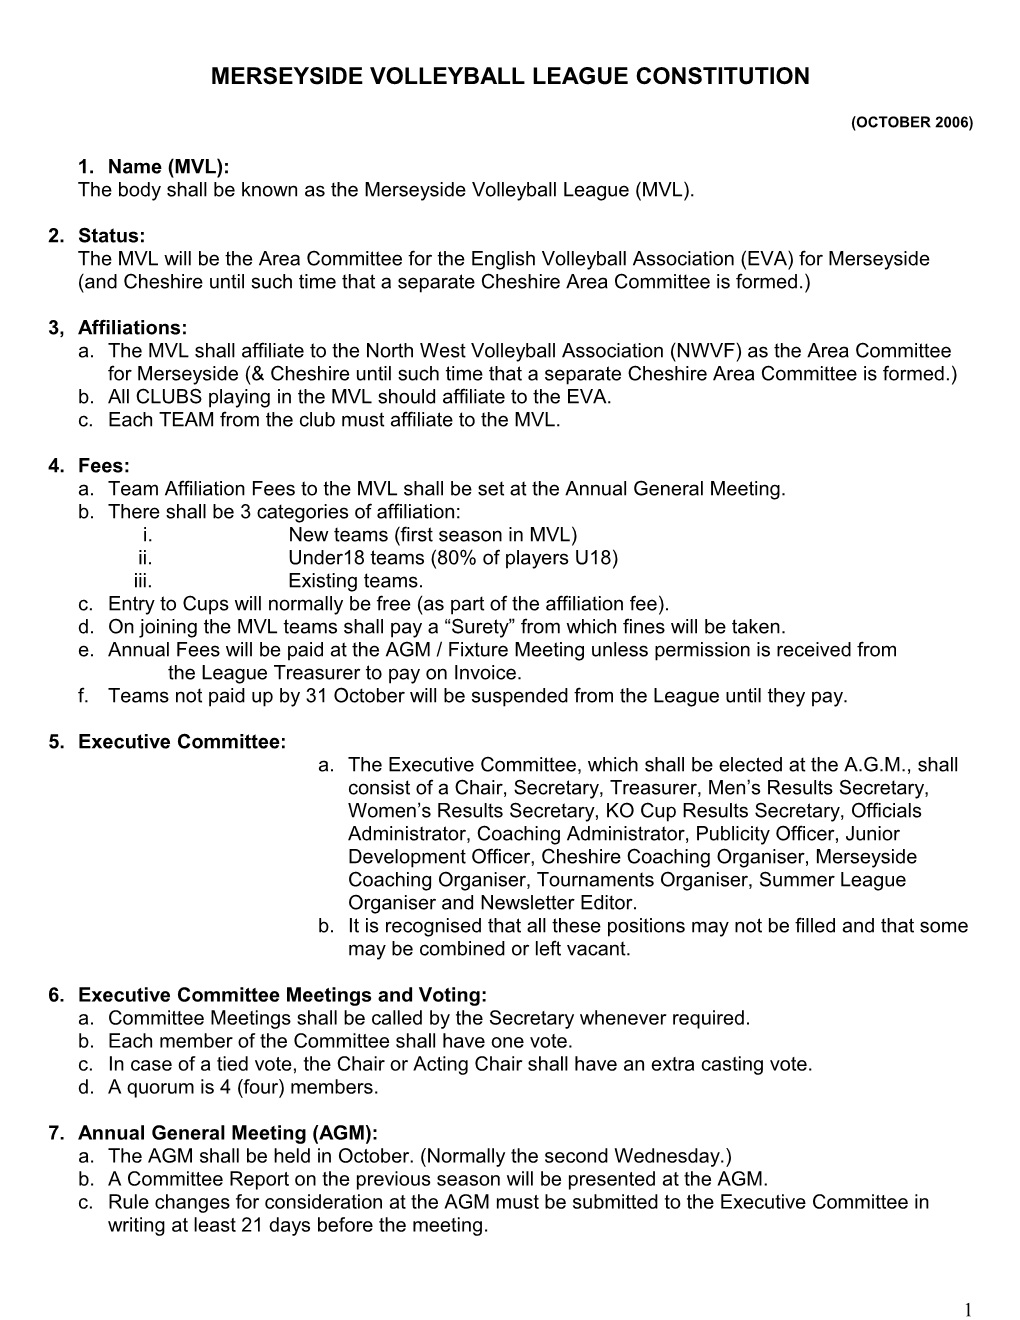 Merseyside Volleyball League Constitution Draft (10